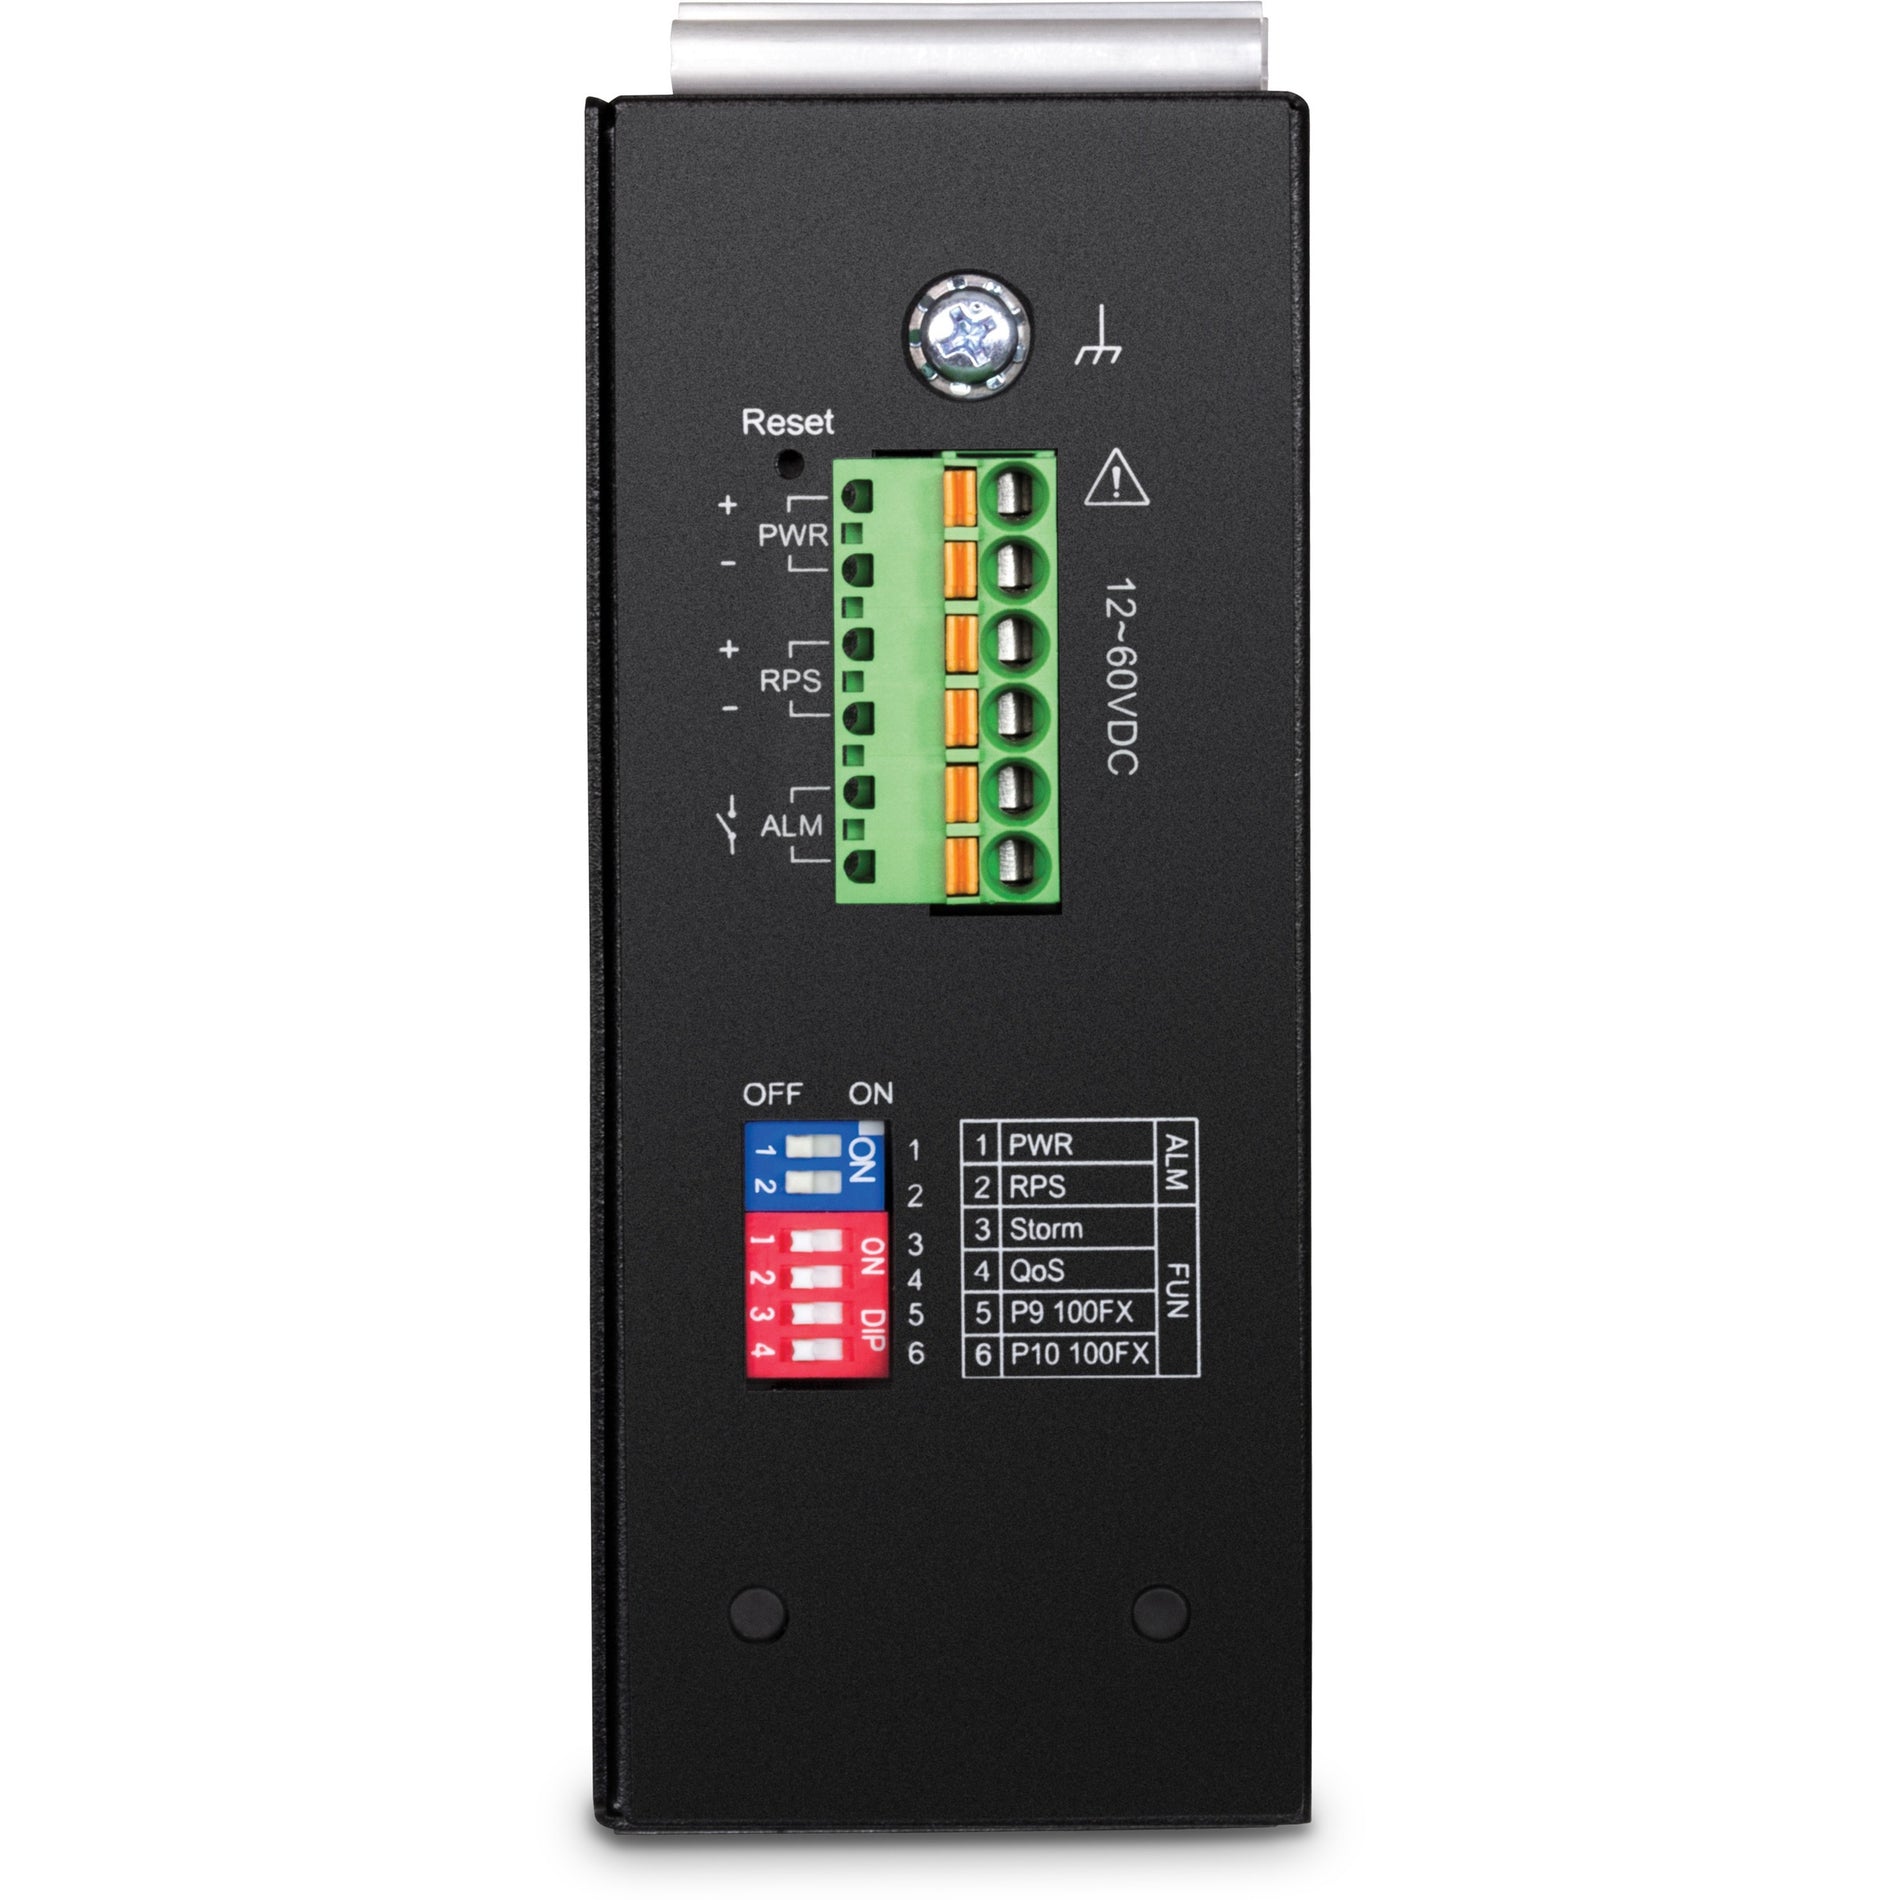 TRENDnet TI-G102I 10-Port Industrial Gigabit L2 Managed DIN-Rail Switch, 8 x Gigabit, 2 x SFP Slots, VLAN, QoS, LACP